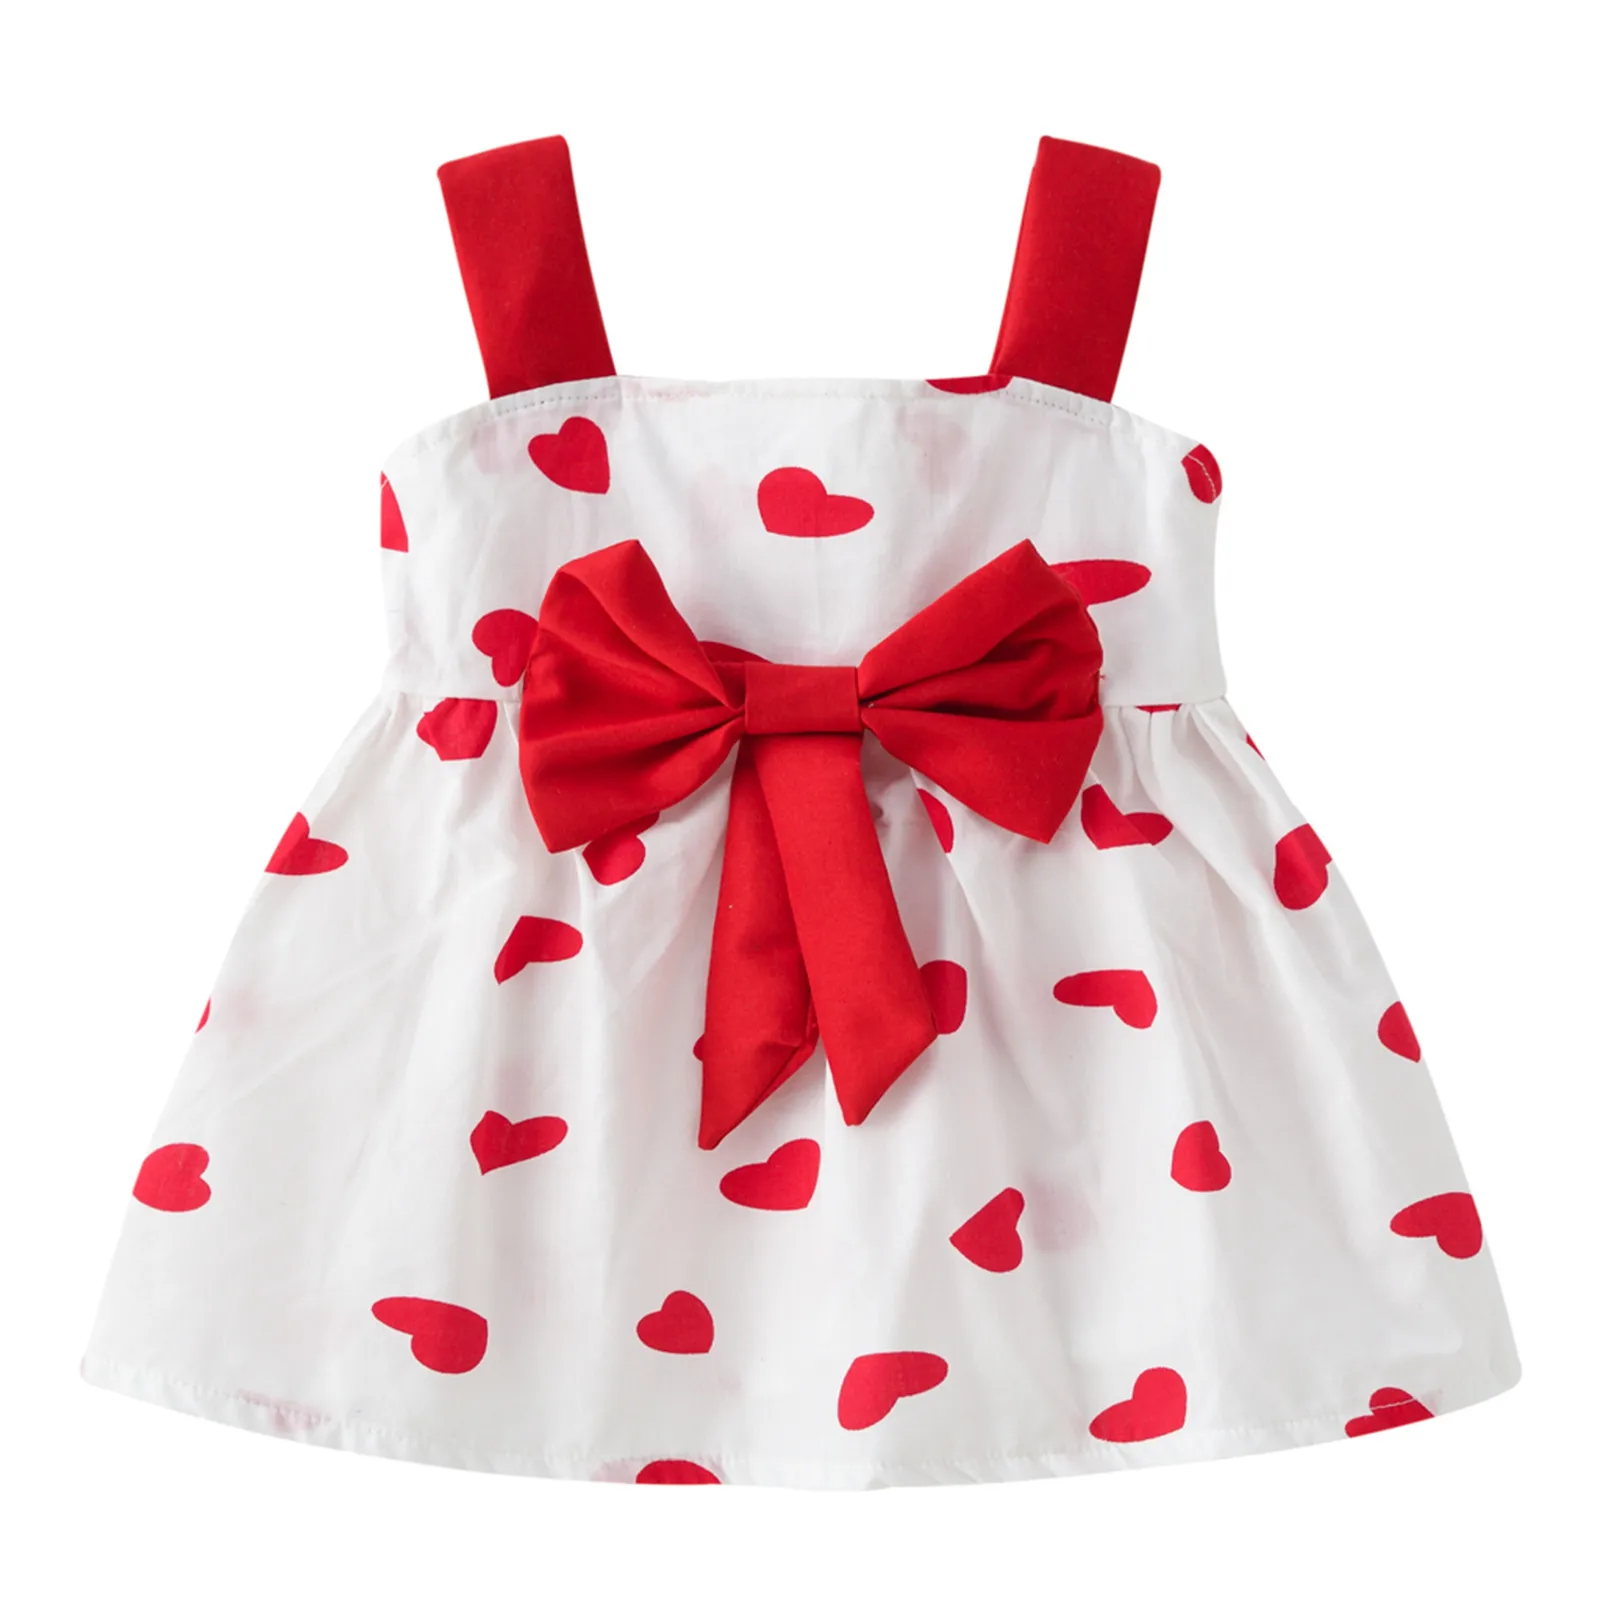 Summer Toddler Baby Kids Girls Princess Dress For Girls Heart Sleeveless Fruit Print Bowknot Dresses Kids Outfits Girl Clothes